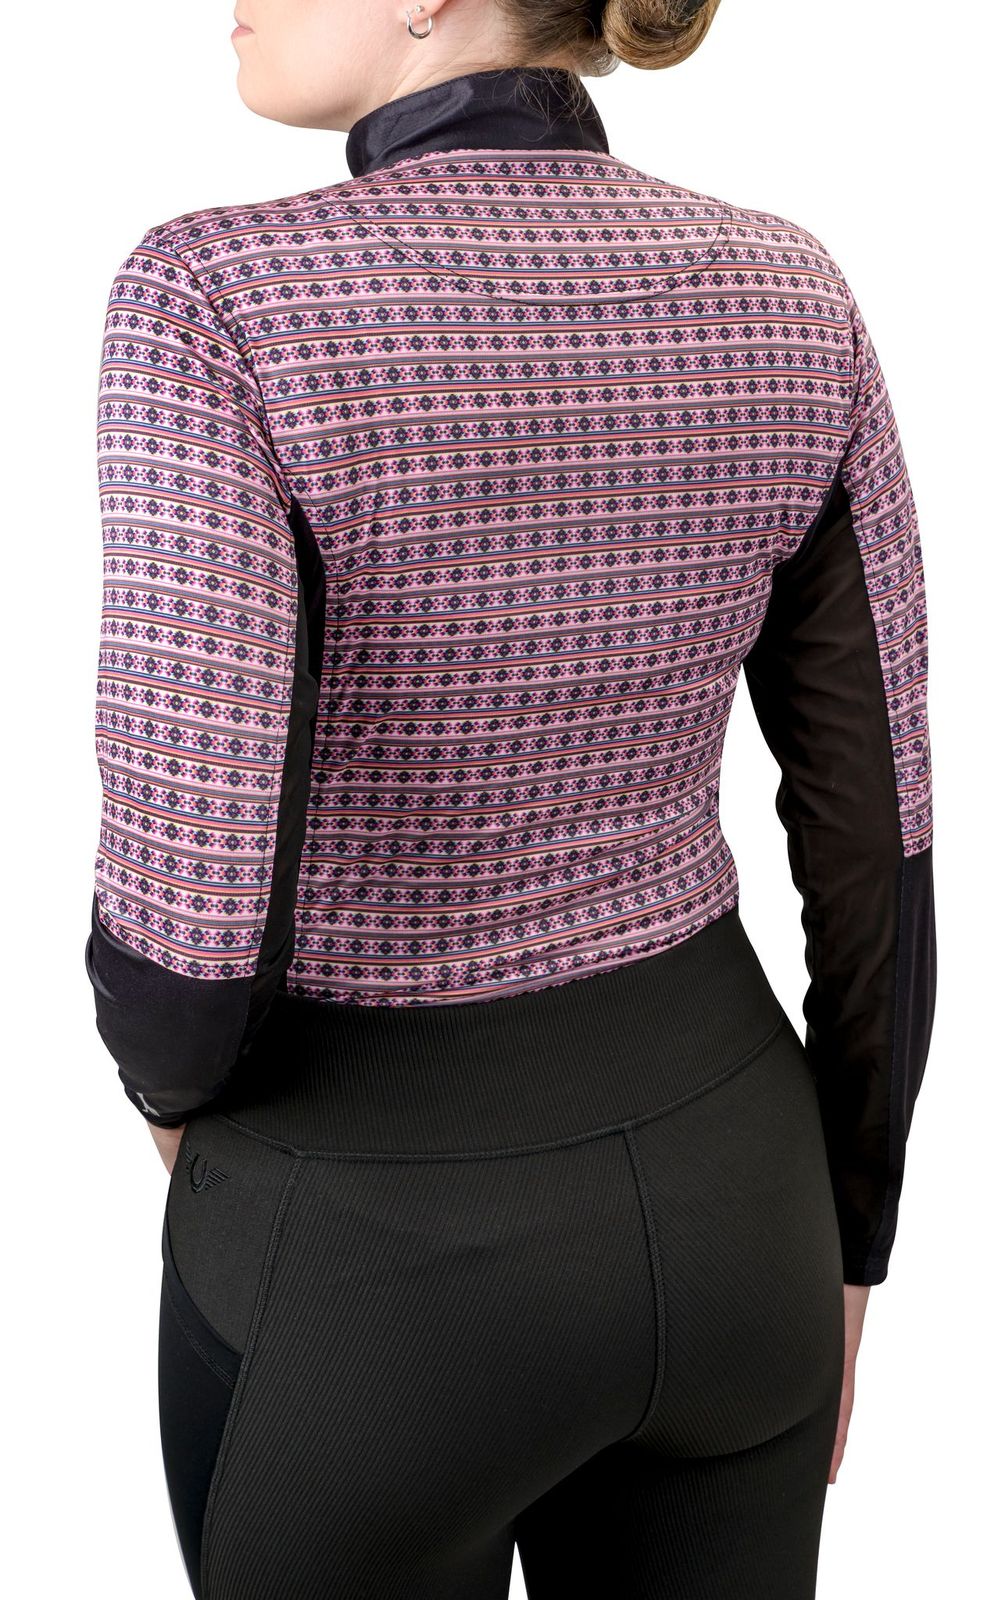 Equine Couture Vivid Aztec Sport Shirt - Breeches.com